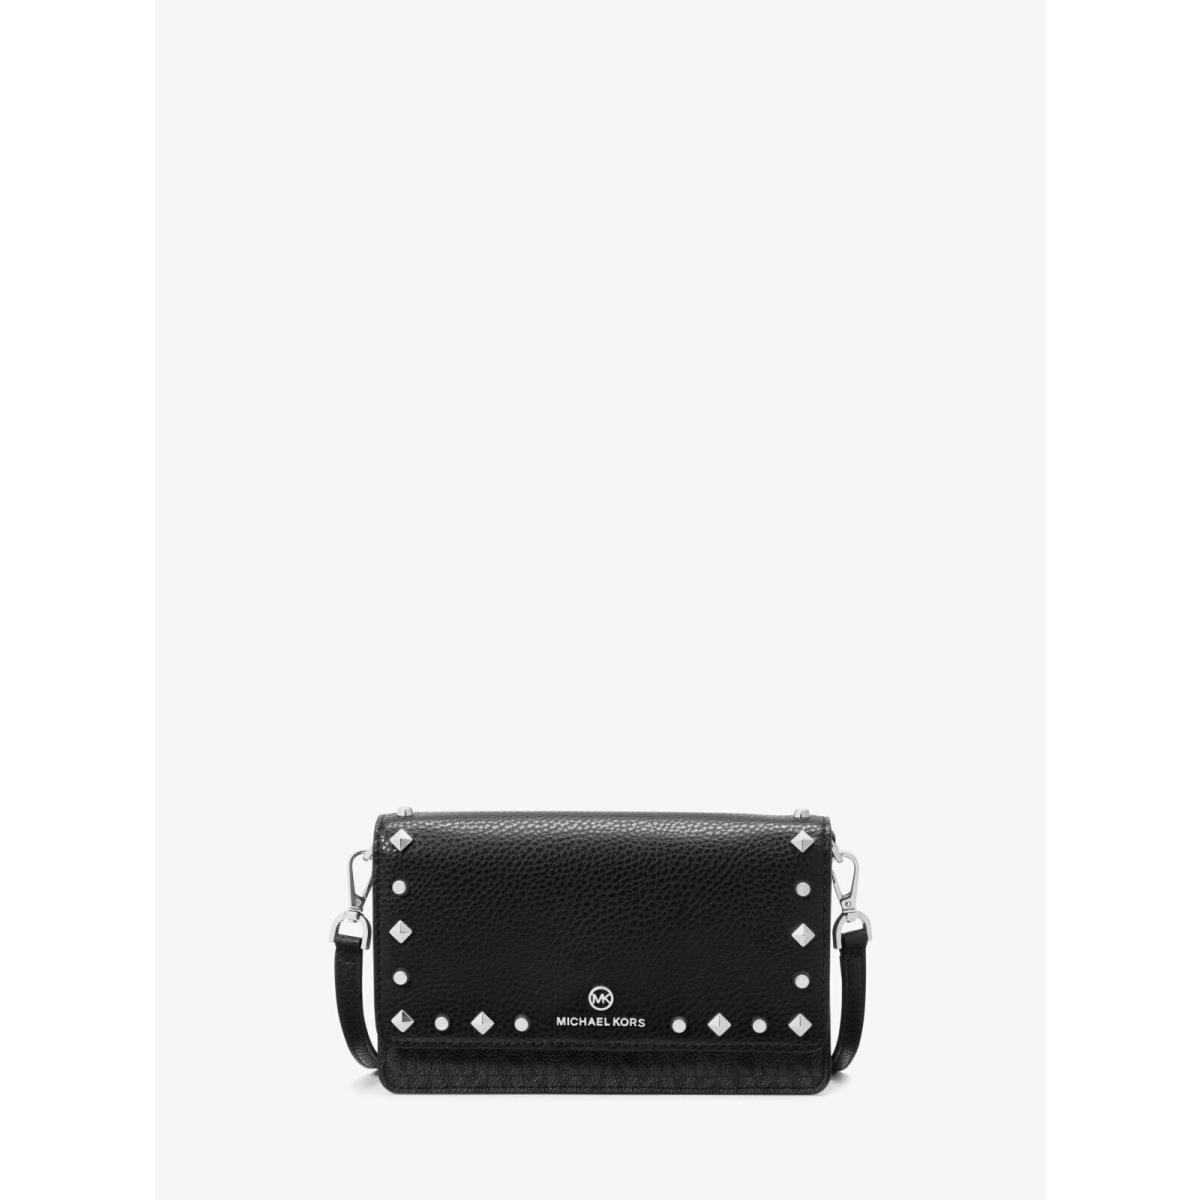 Michael Kors  bag   - Black Handle/Strap, Silver Hardware, Black Exterior 8